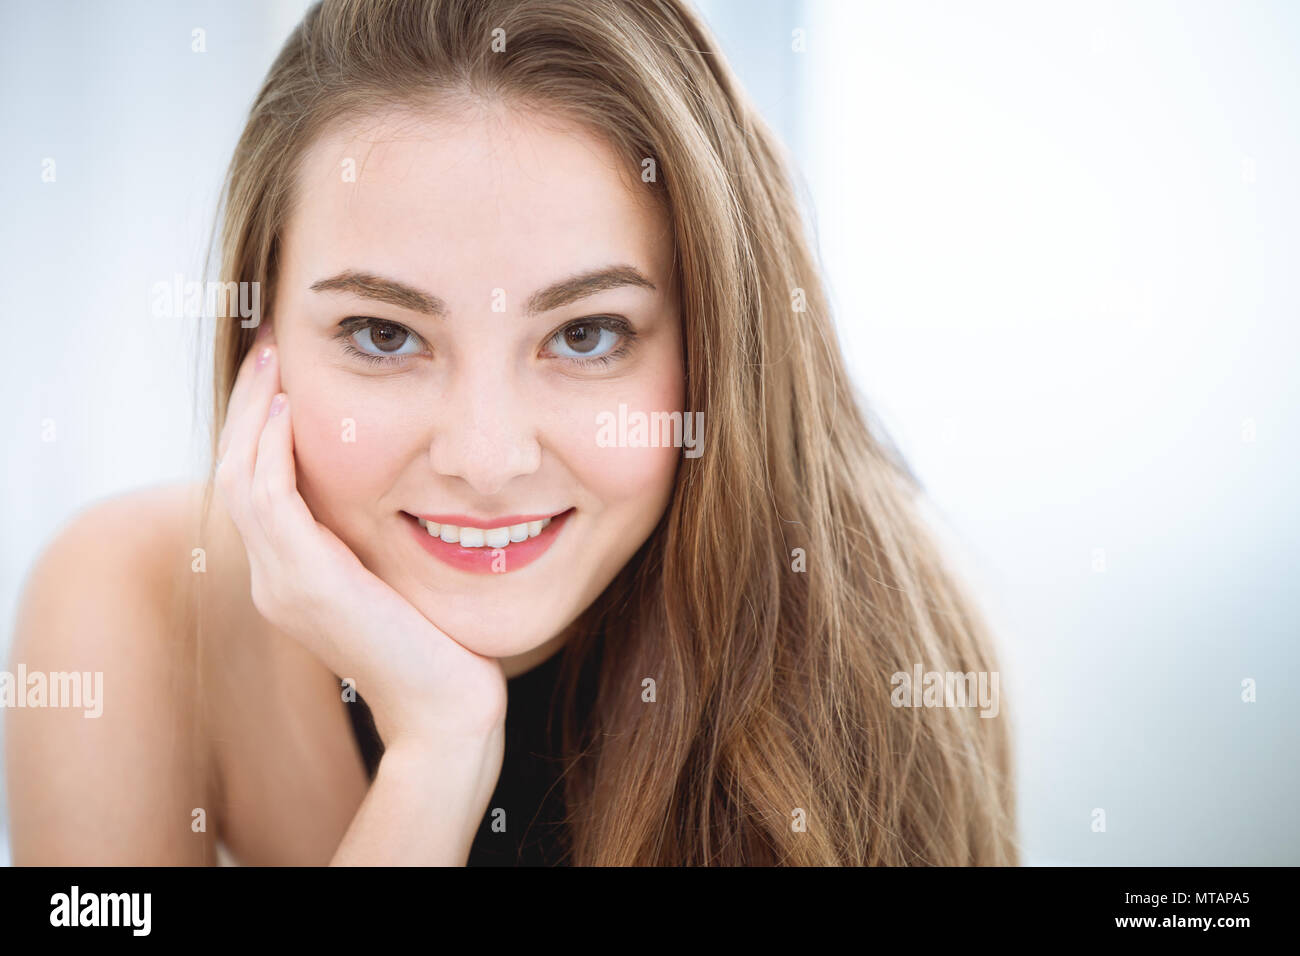 beautiful woman face smiling white teeth Stock Photo